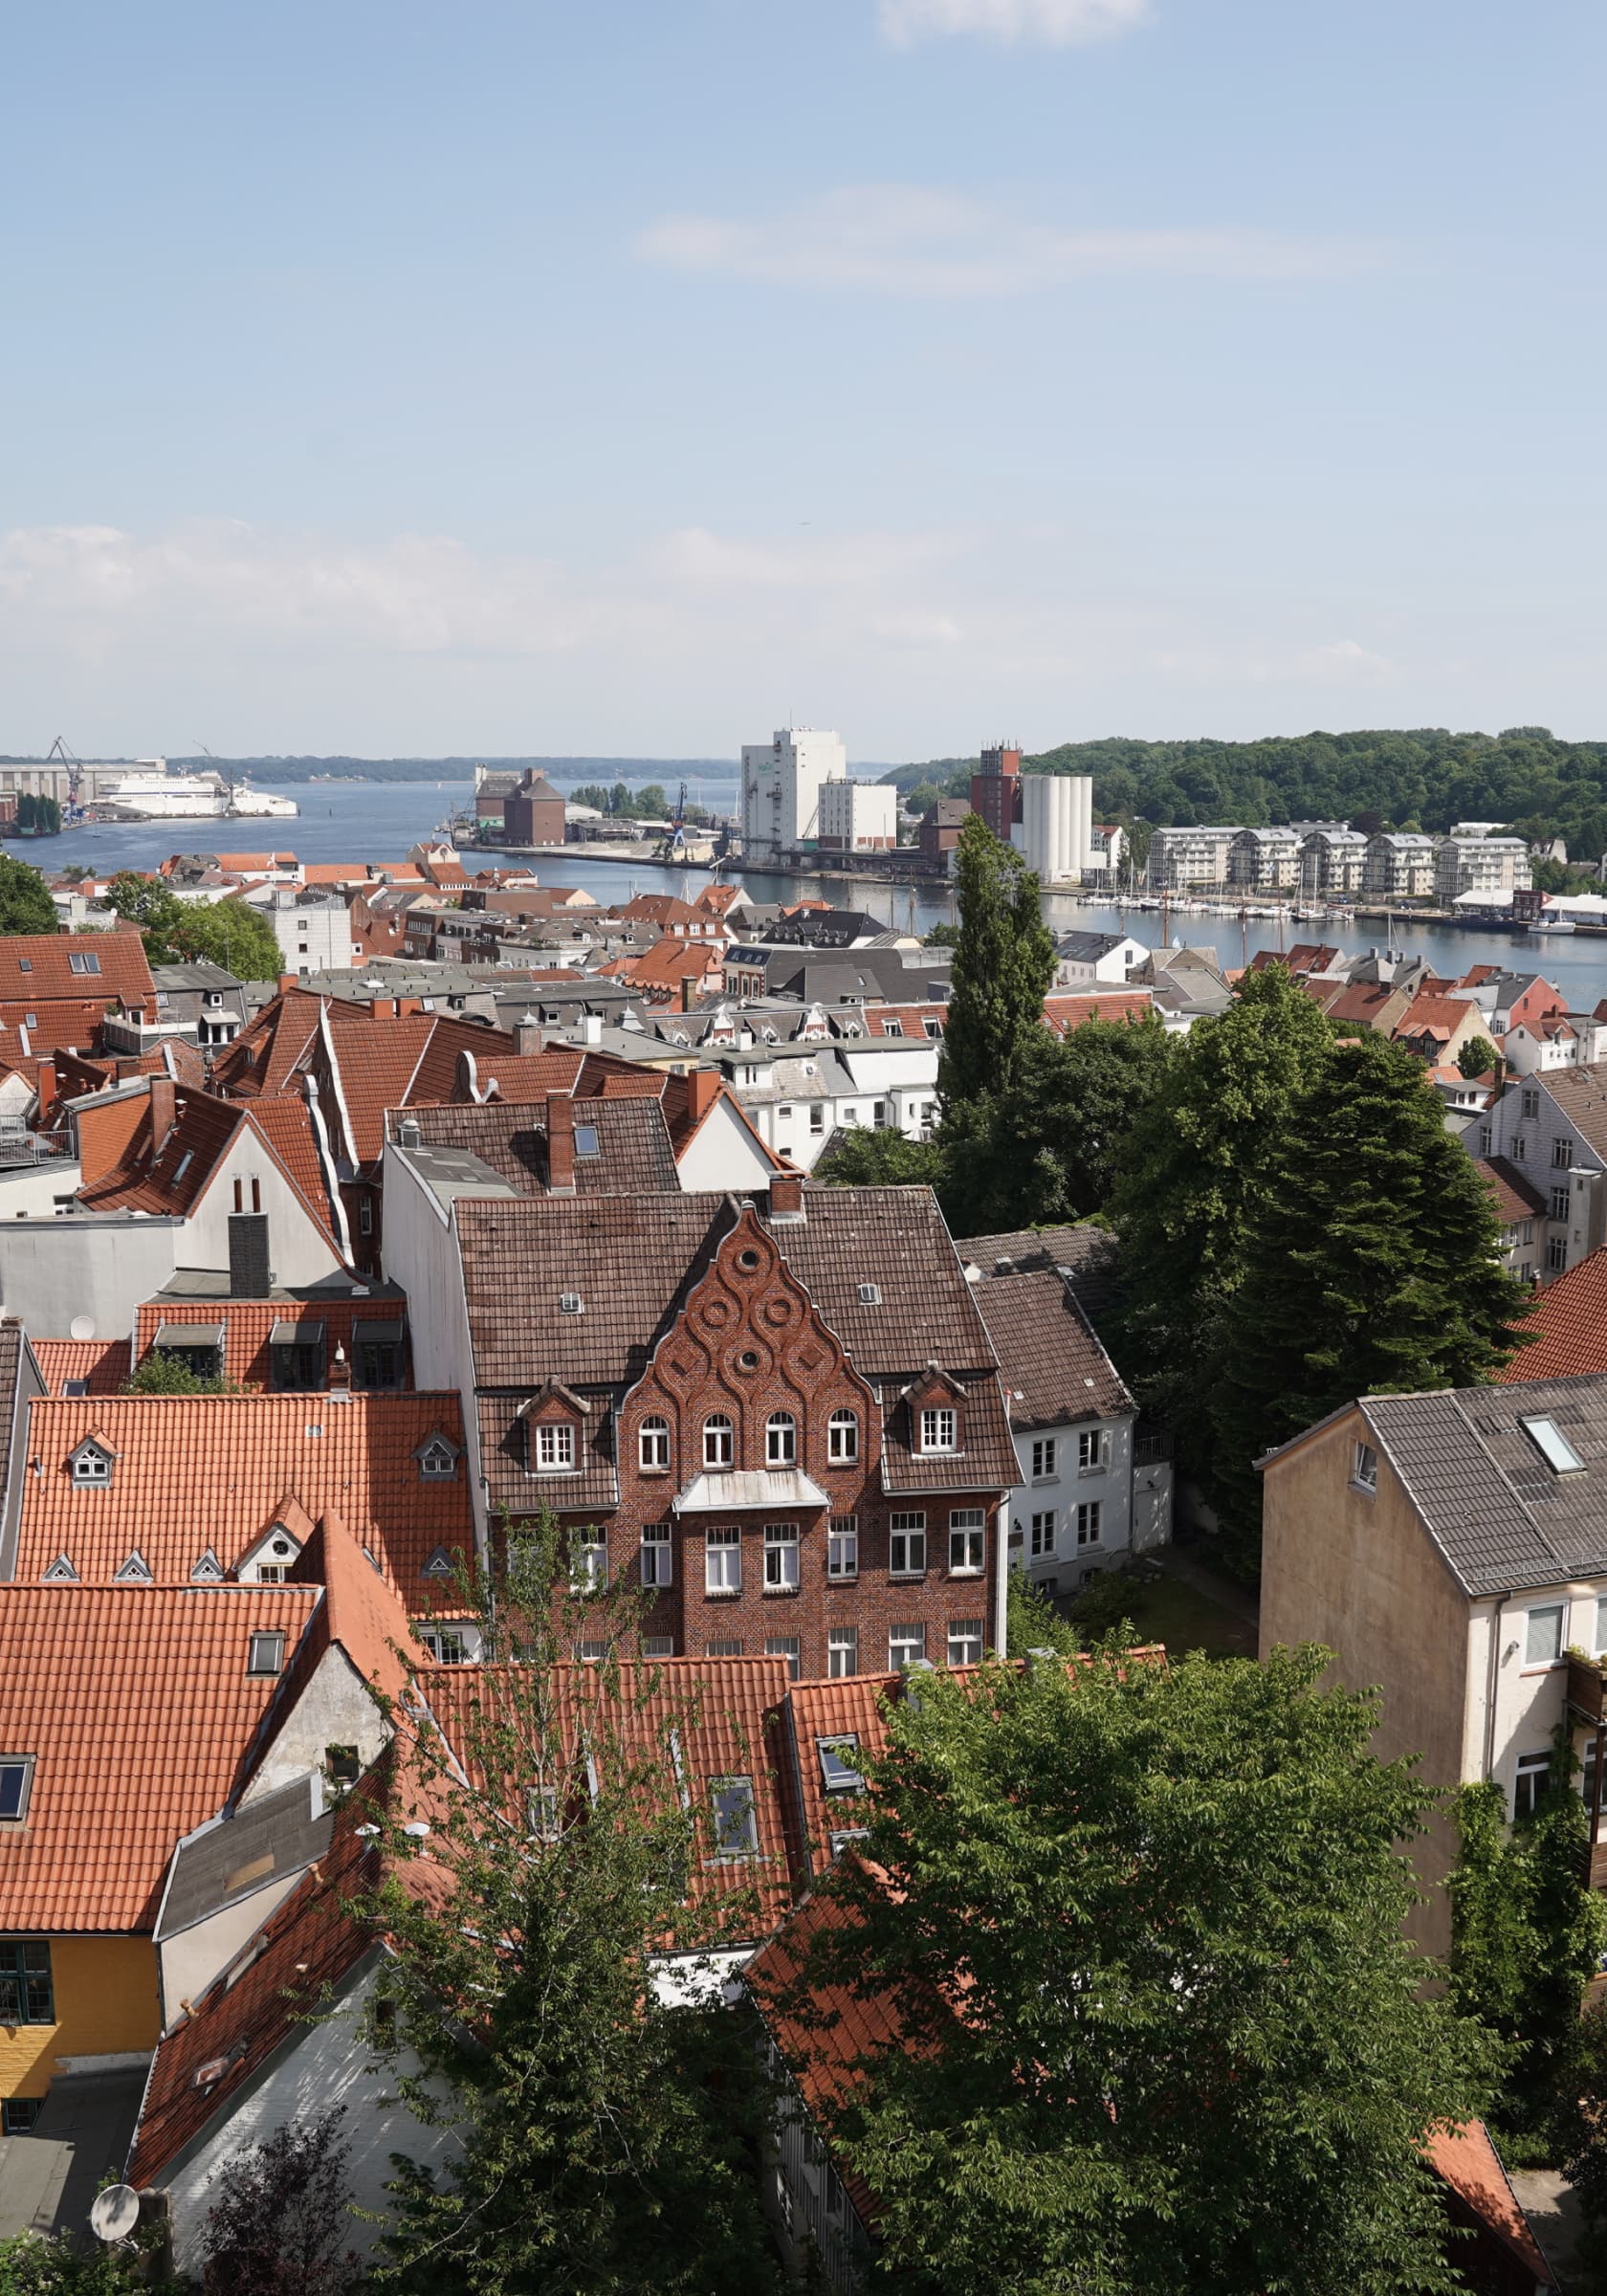 Lanscape of Flensburg city